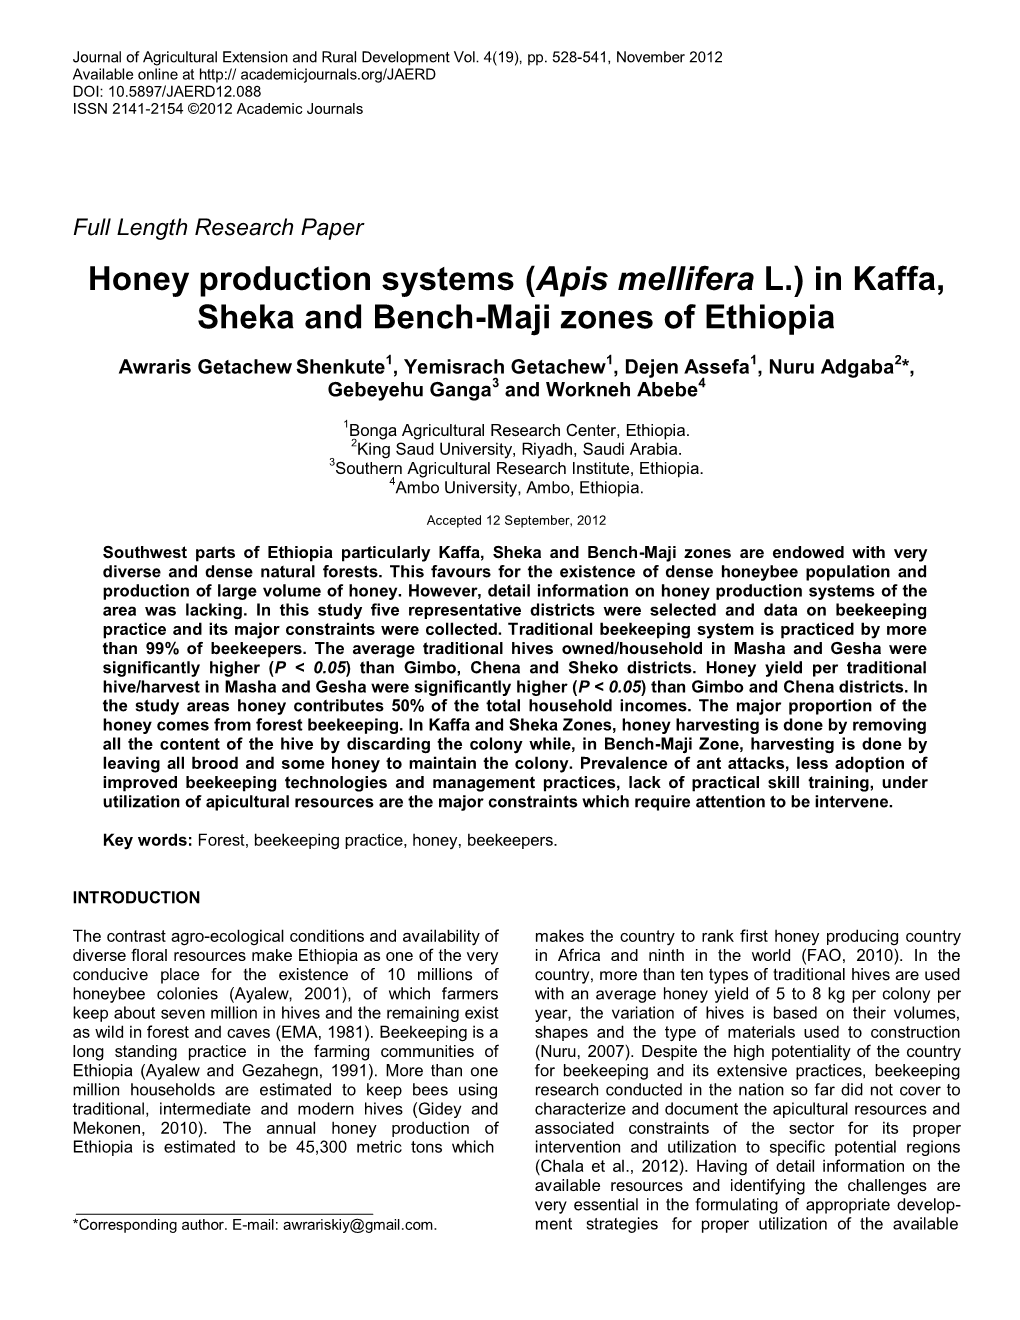 Honey Production Systems (Apis Mellifera L.) in Kaffa, Sheka and Bench-Maji Zones of Ethiopia